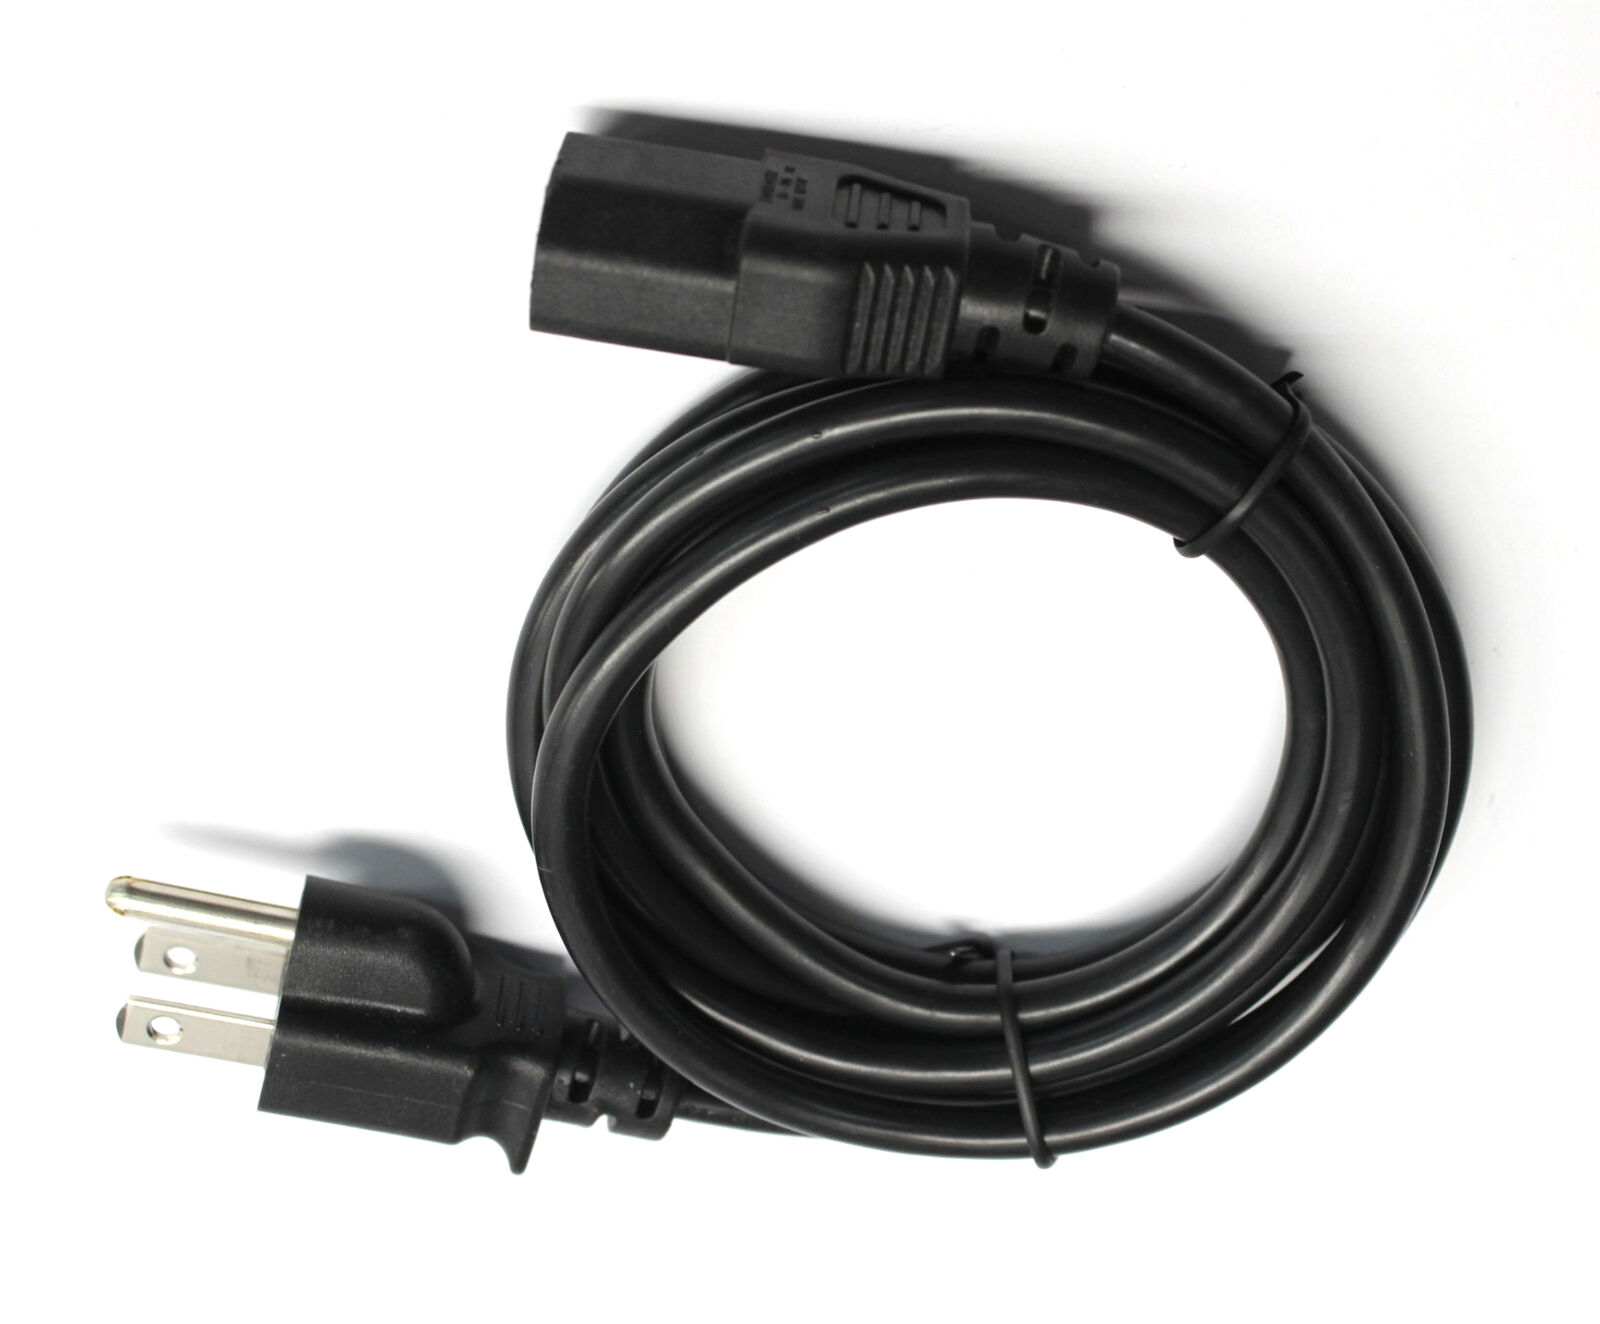 Standard Power Cord Cable for HP Laserjet Pro 700 Enterprise M712 M775 Printers